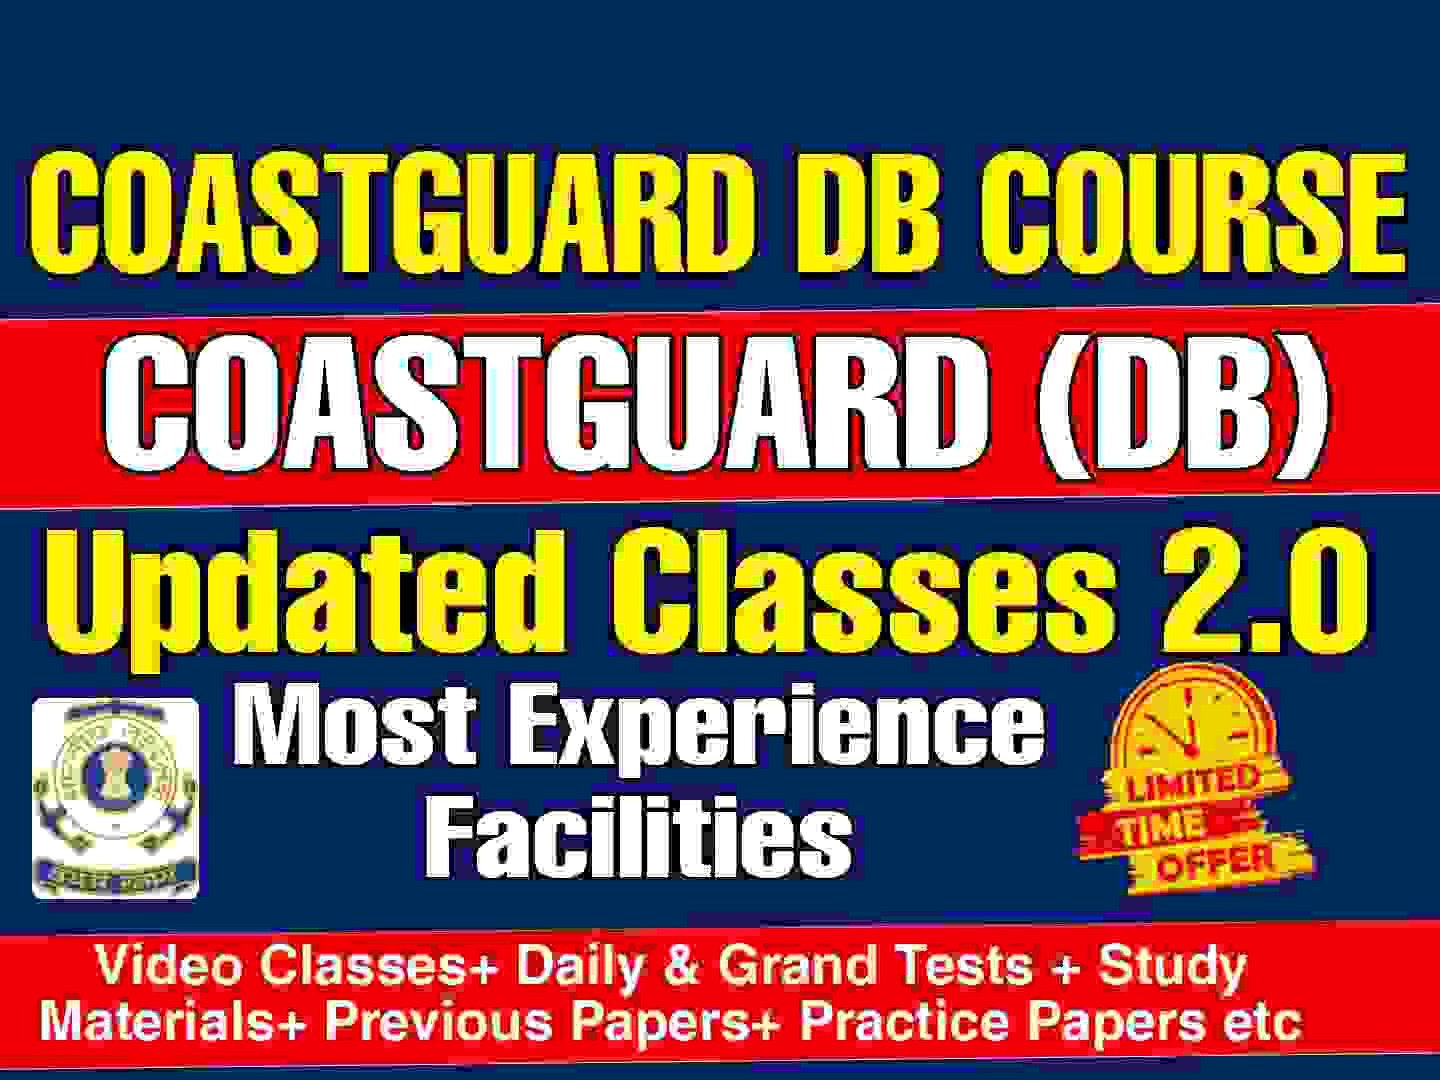 Coastguard DB Best Online Coaching